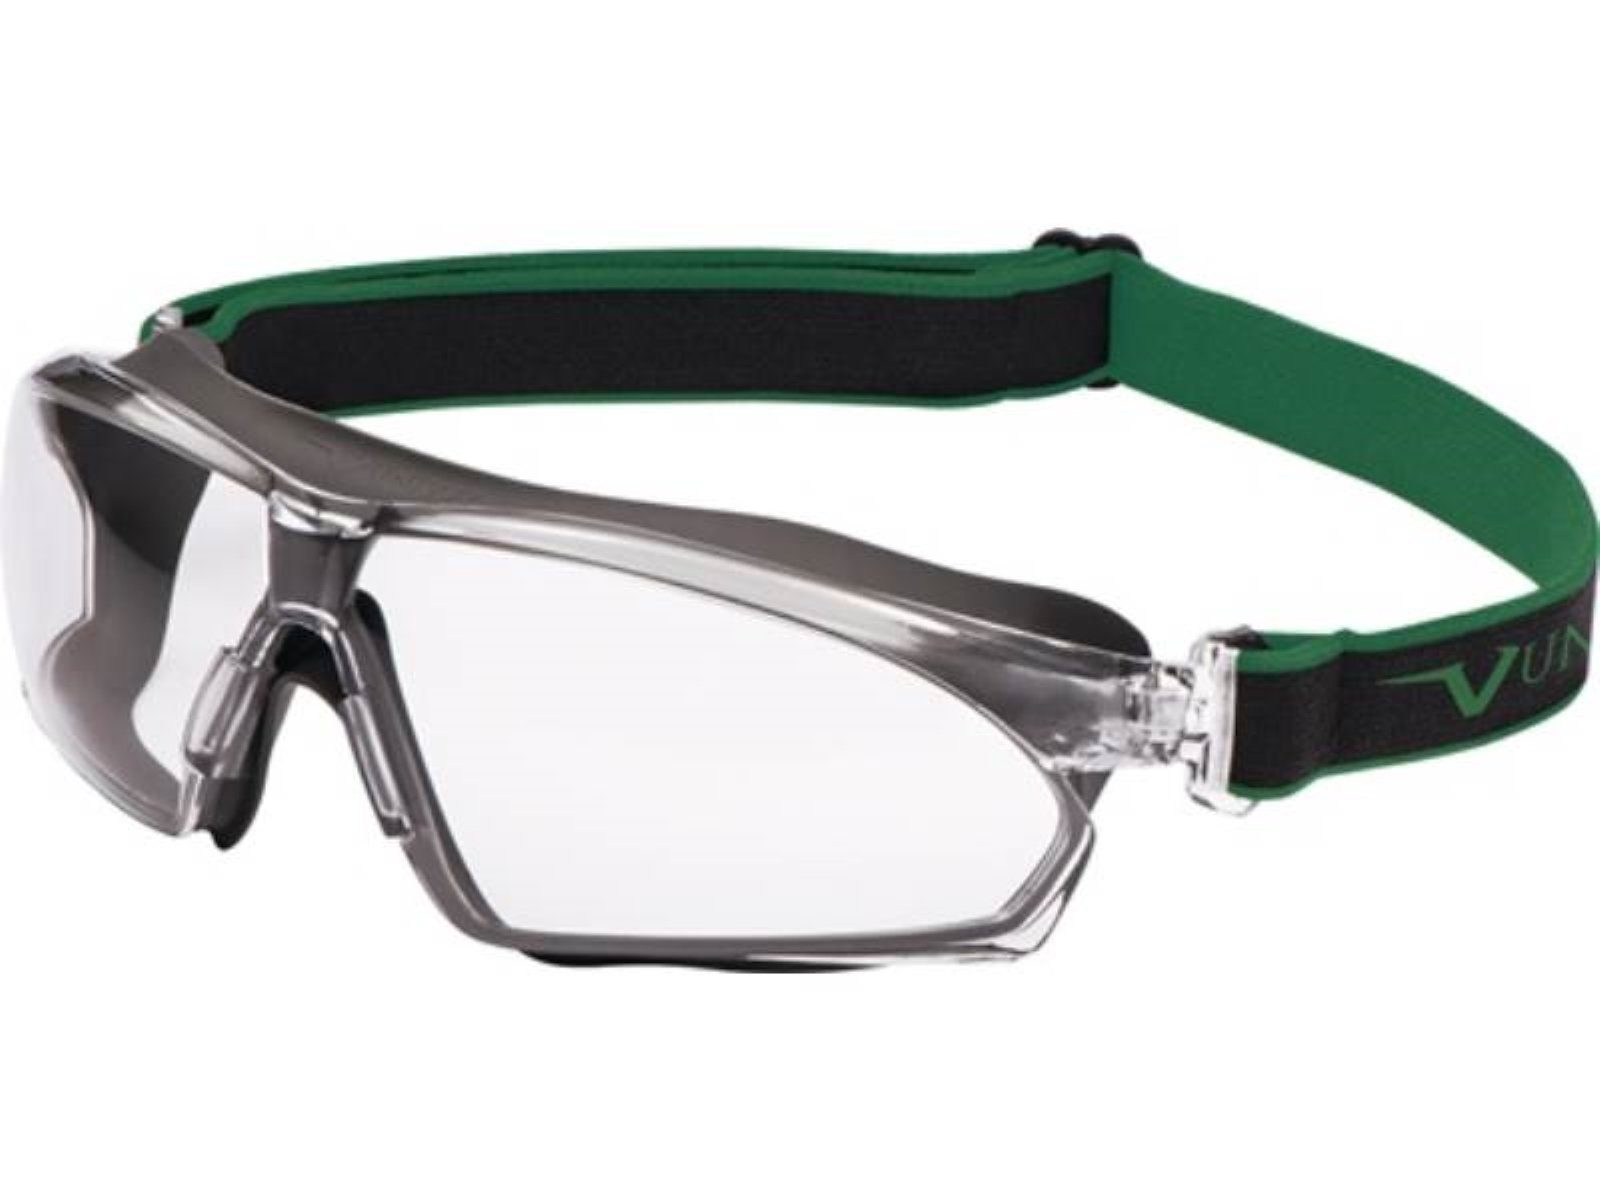 Univet Rahmen Vollsichtschutzbrille 625 EN 166 EN 170 Rahmen dunkelgrau,Scheibe klar